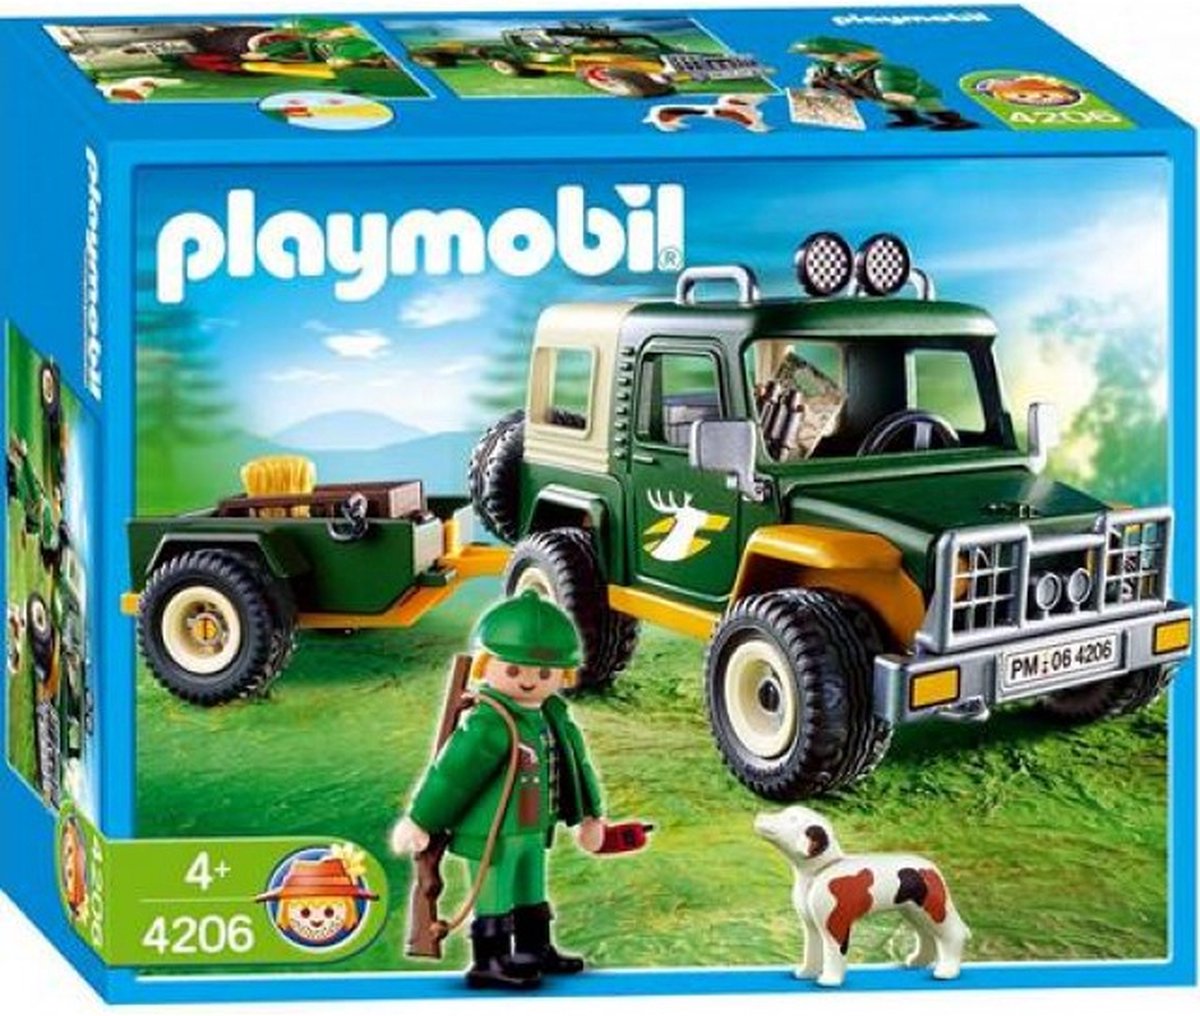 Playmobil Jeep met boswachter - 4206 | bol